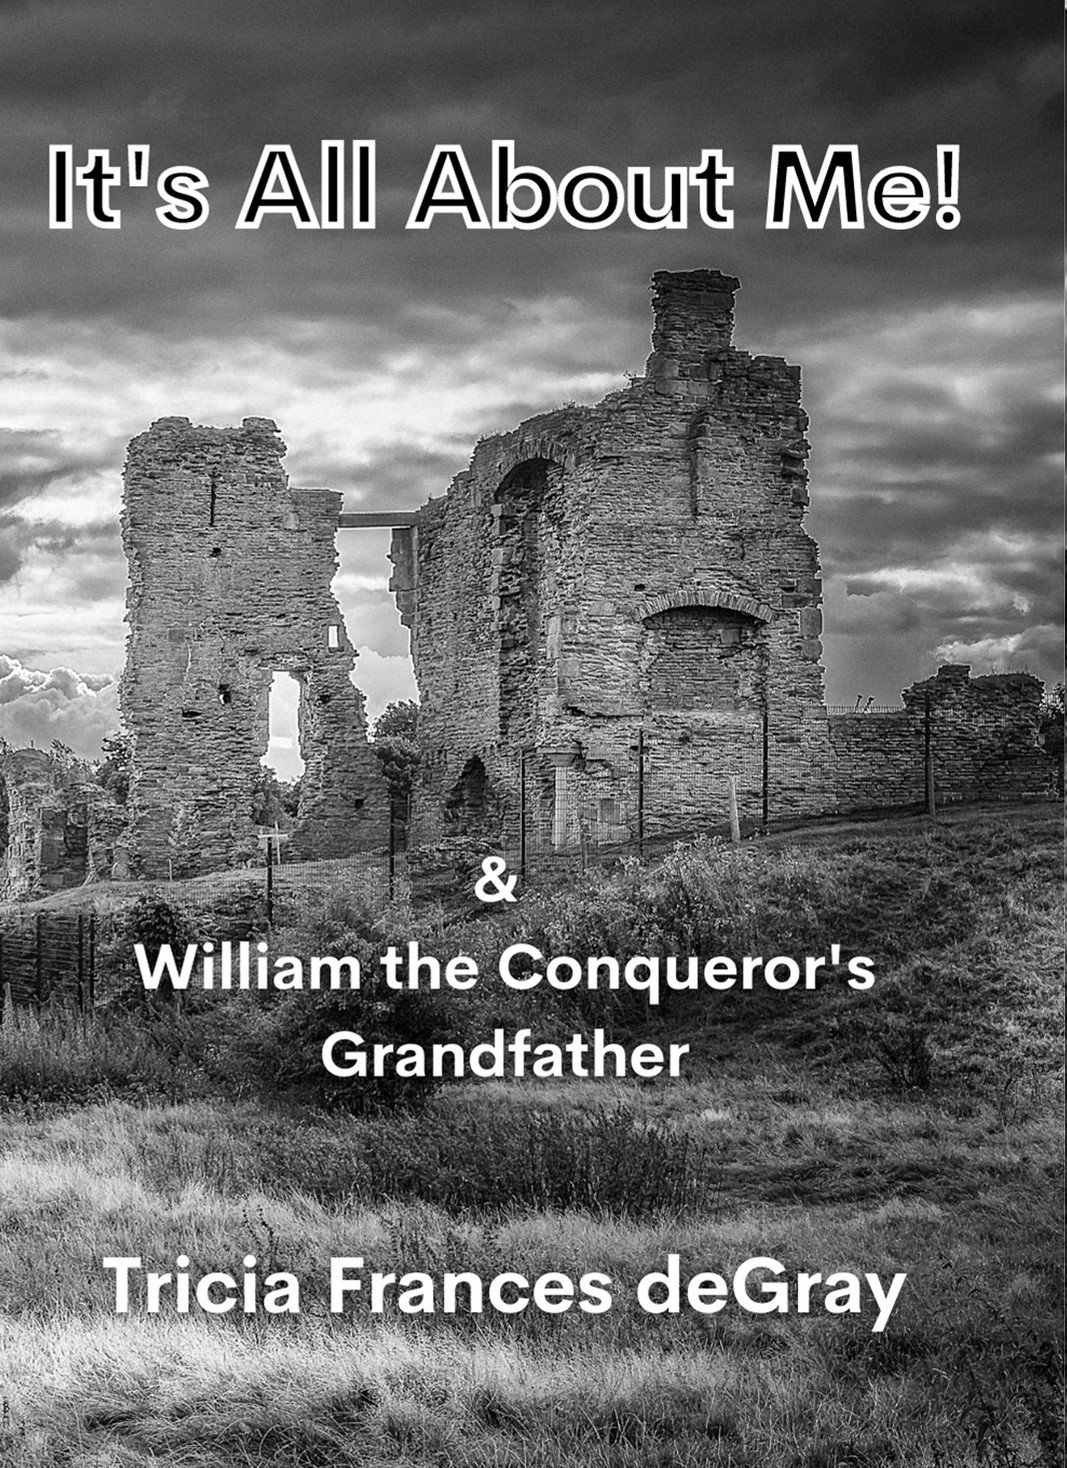 It's All About Me! & William the Conqueror's Grandfather.